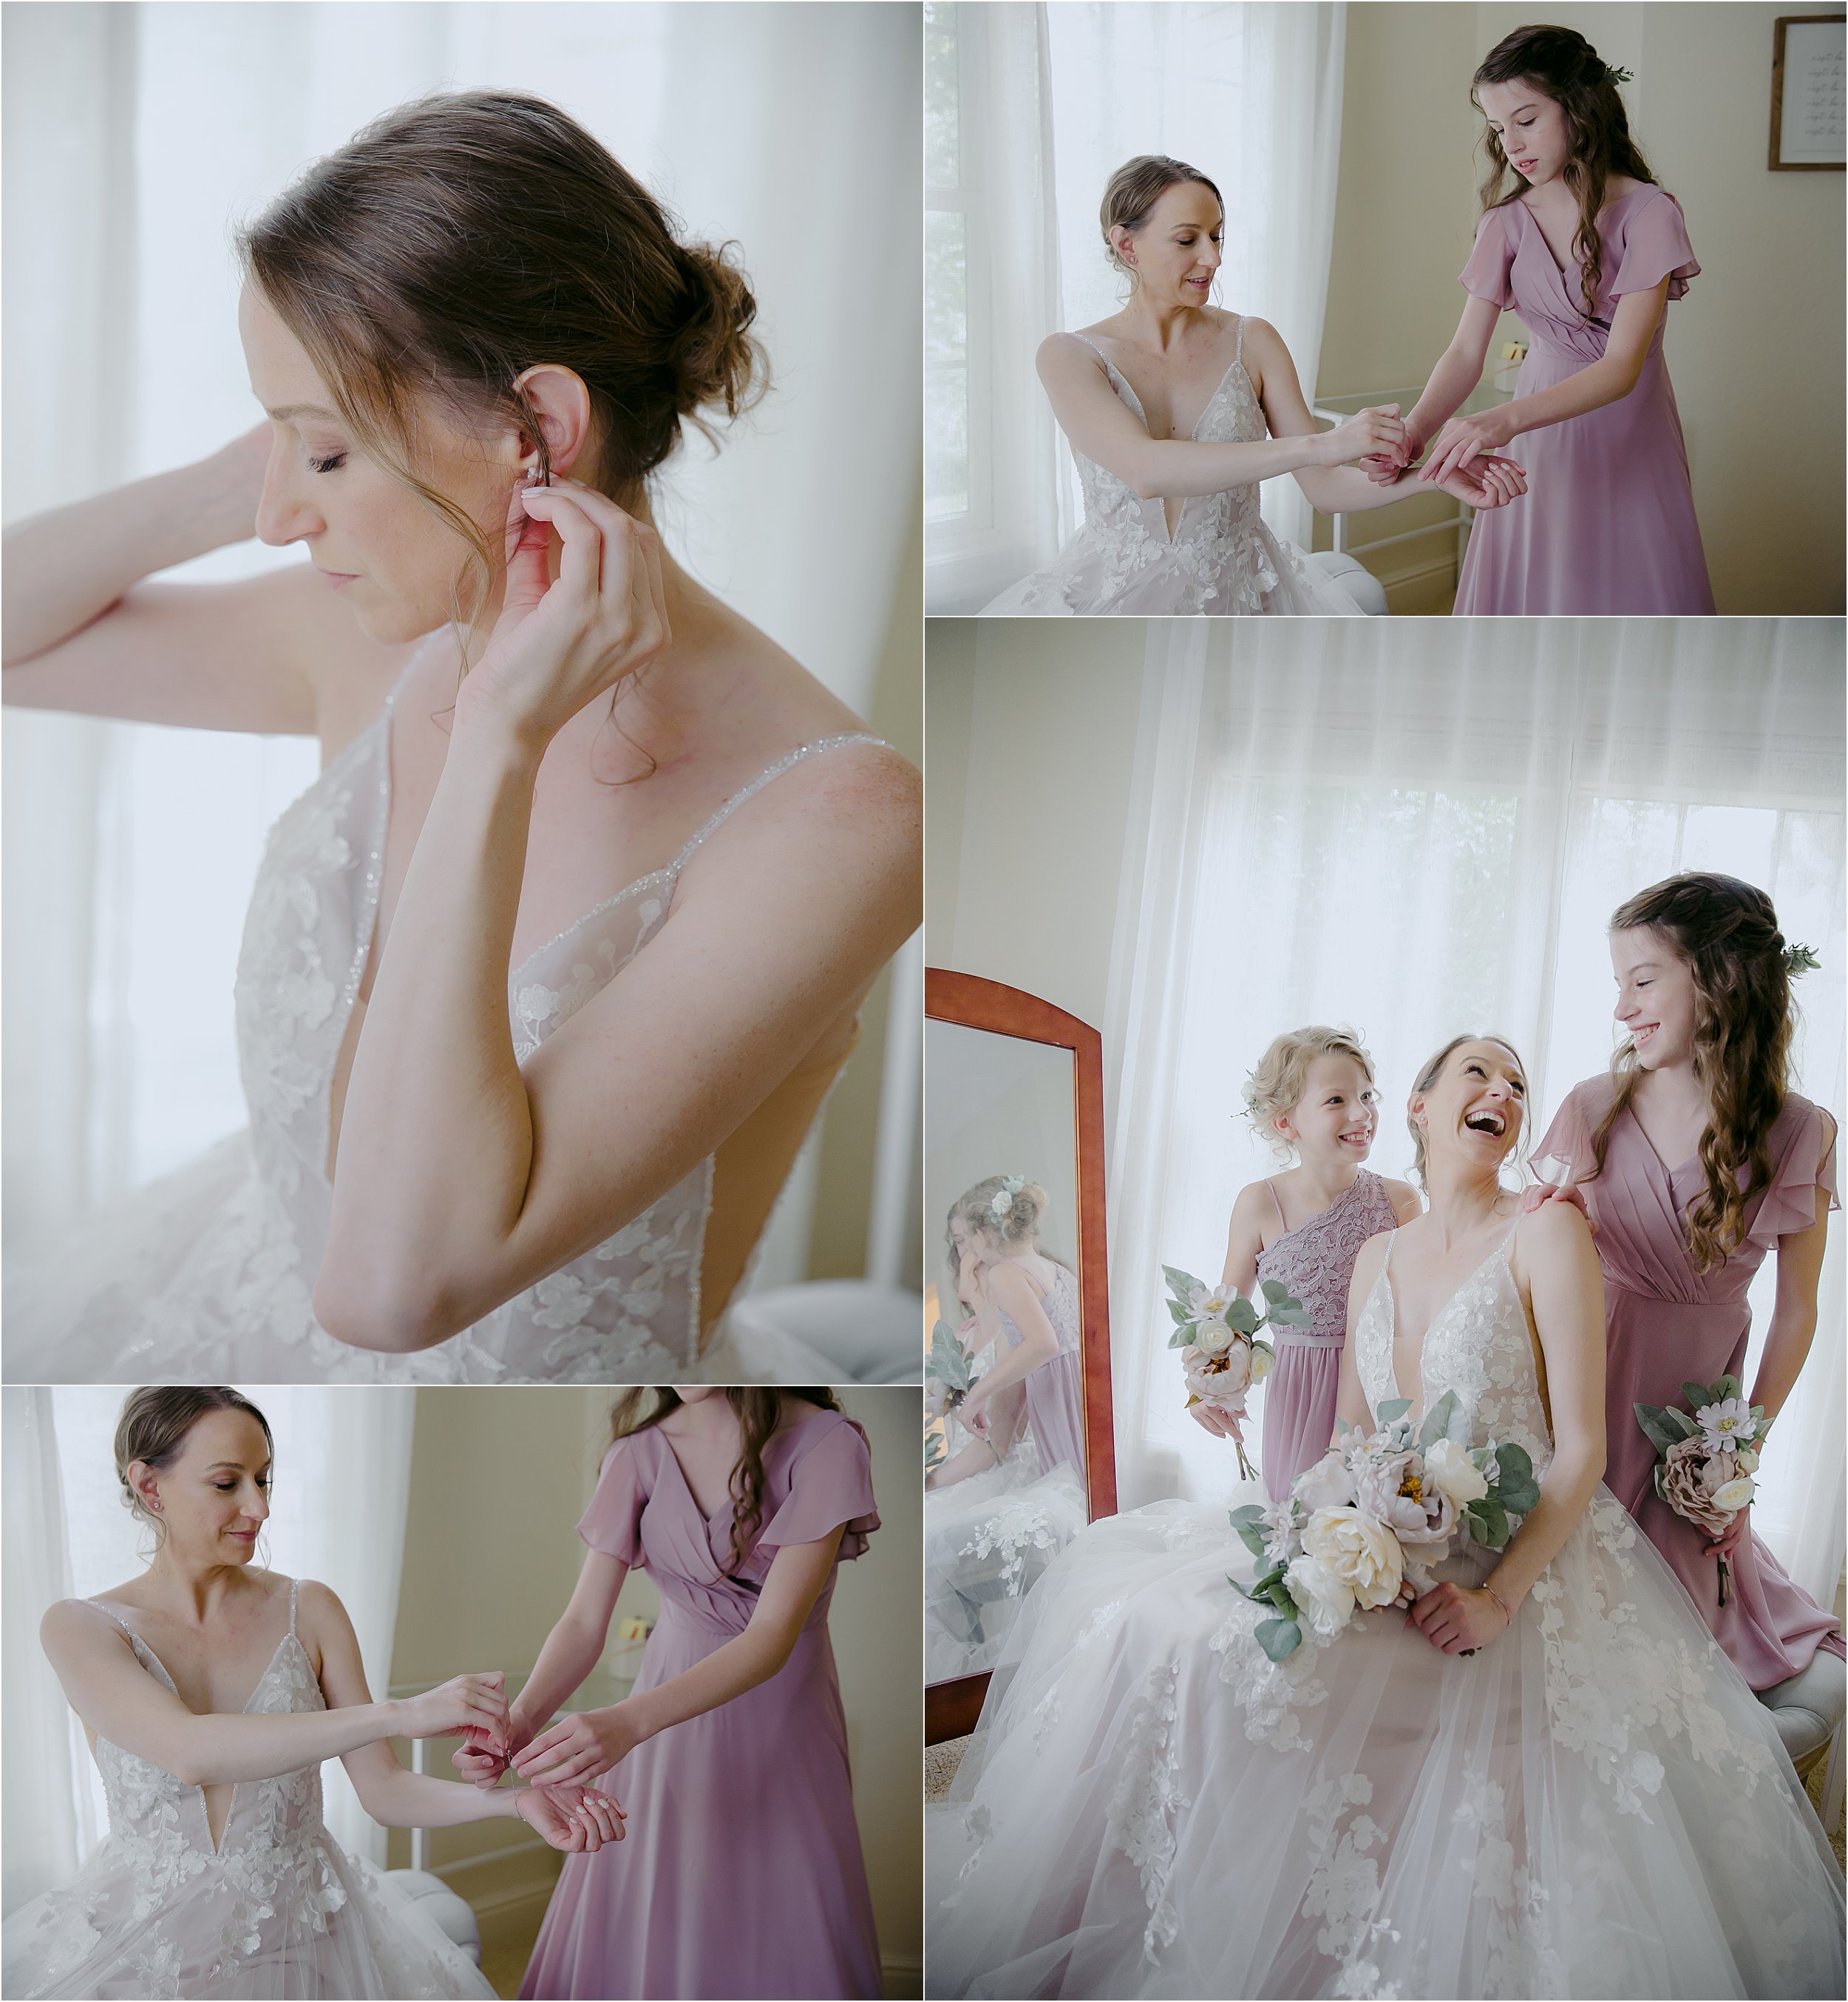 05-bride-young-daughters-helping-put-bracelet-wedding-dress-bouquet.JPG